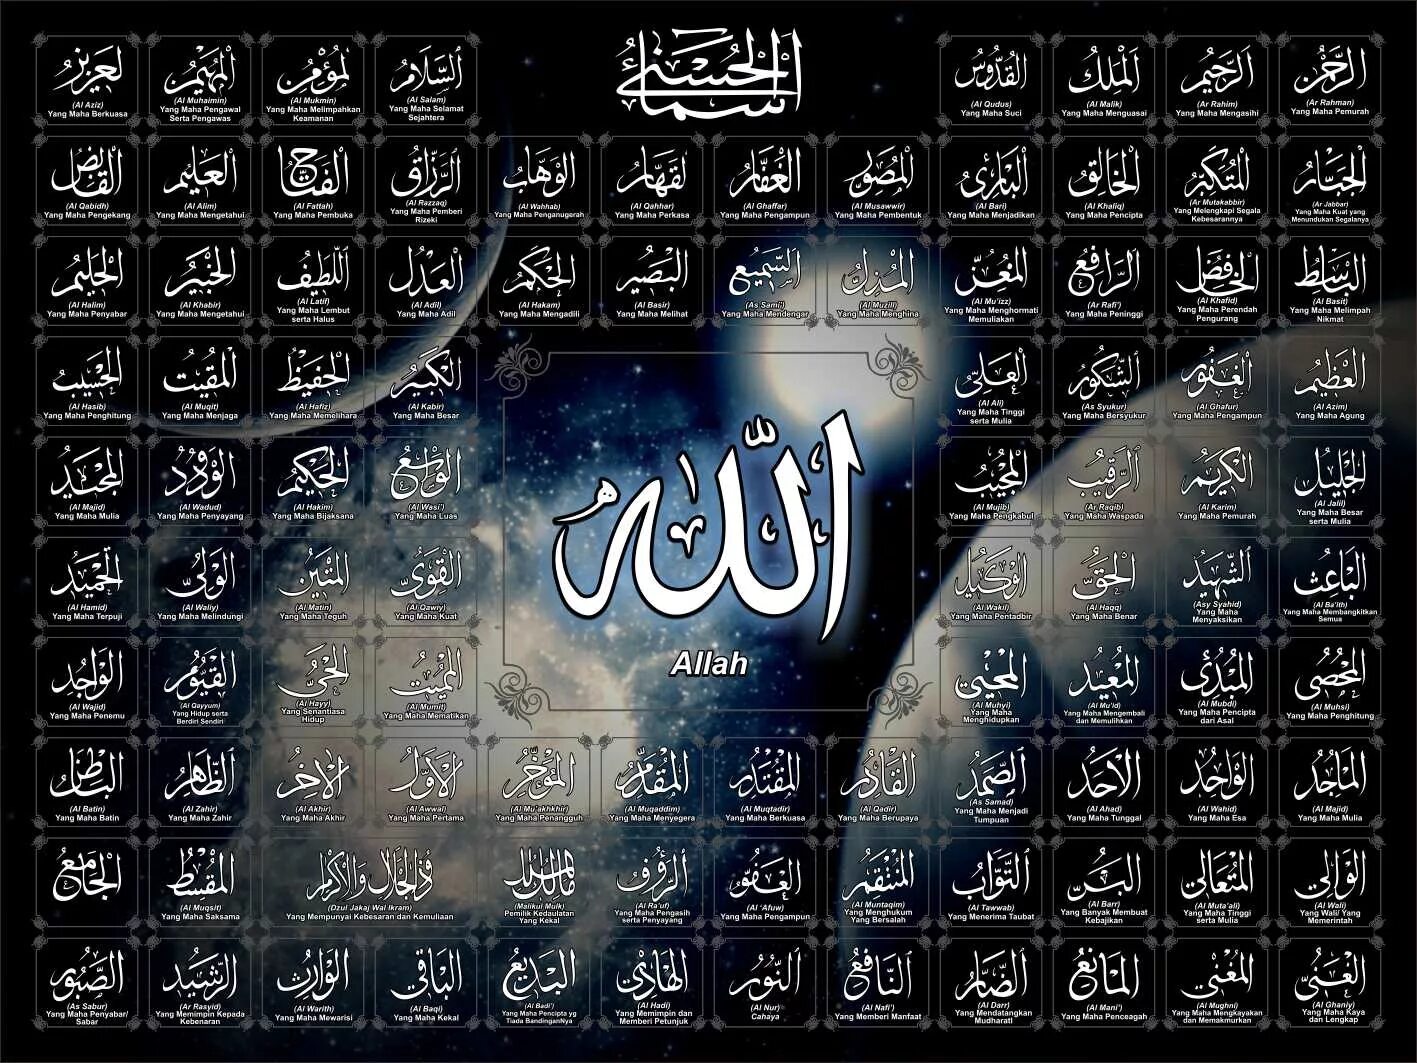 Аль 4 буквы. Асмауль Хусна 99 имен Аллаха. 99 Имен Аллаха на арабском языке. Asma al Husna 99. 99 Имен Аллаха каллиграфия.